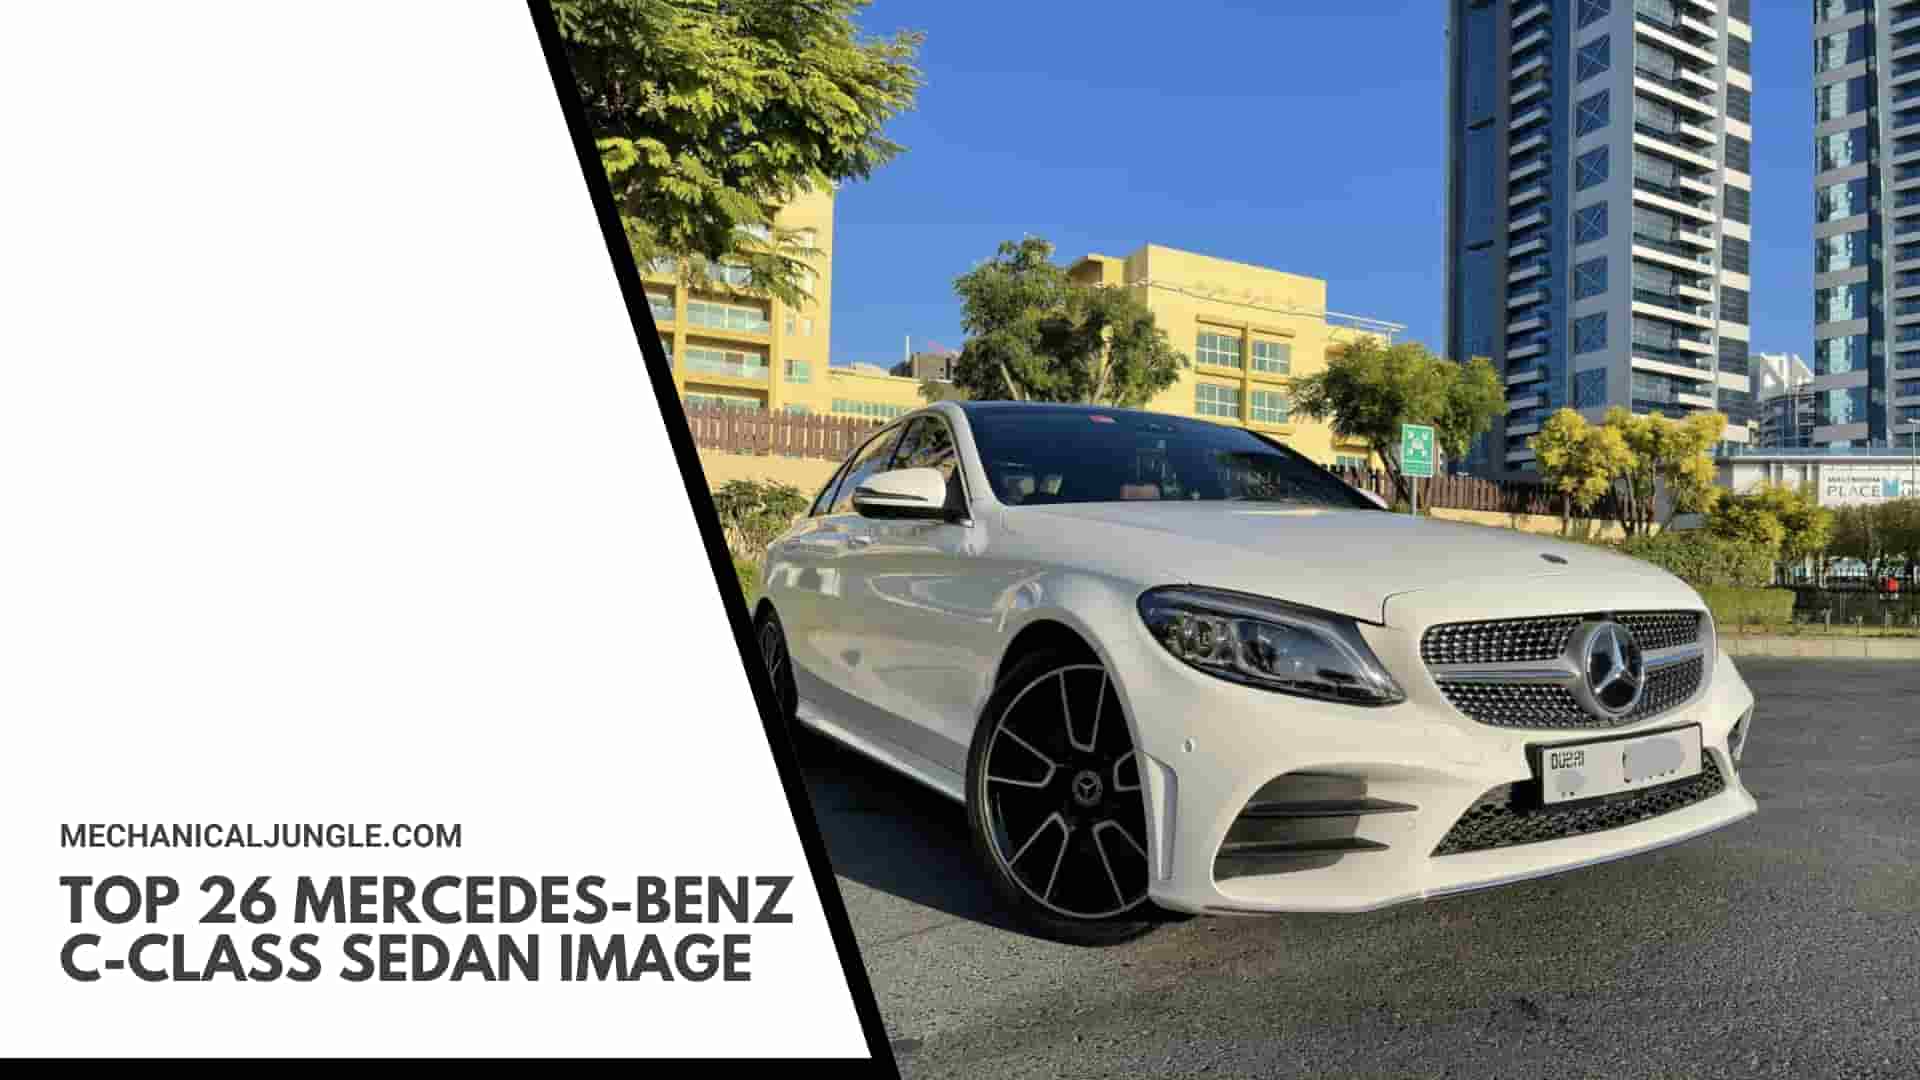 Top 26 Mercedes-Benz C-Class Sedan Image